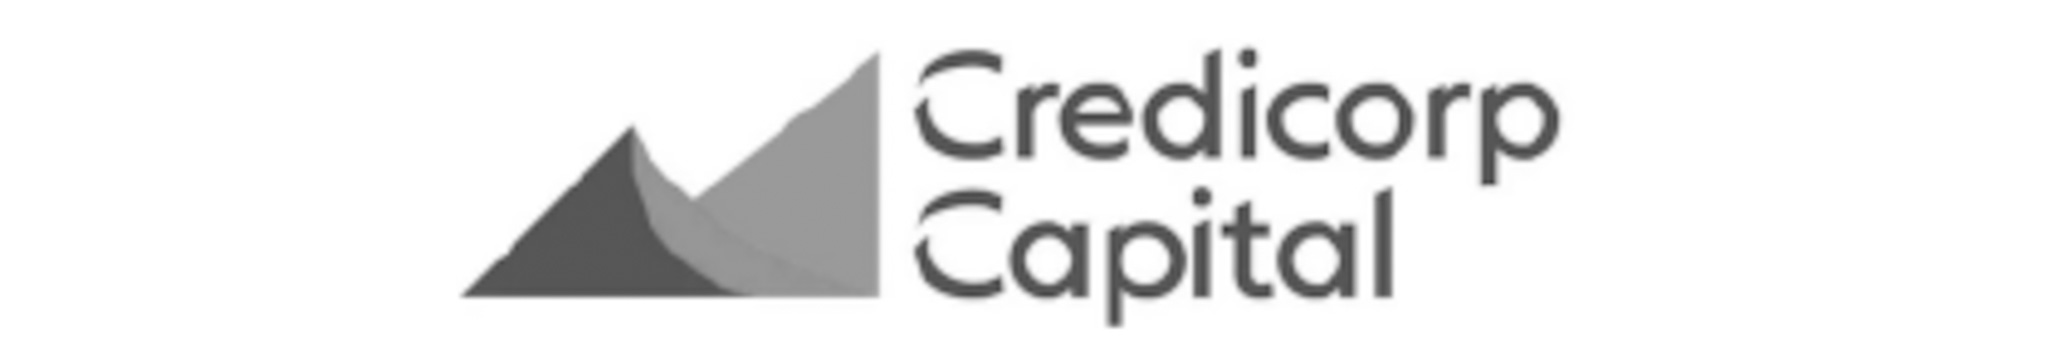 Credicorp Capital Aliado Liquitech